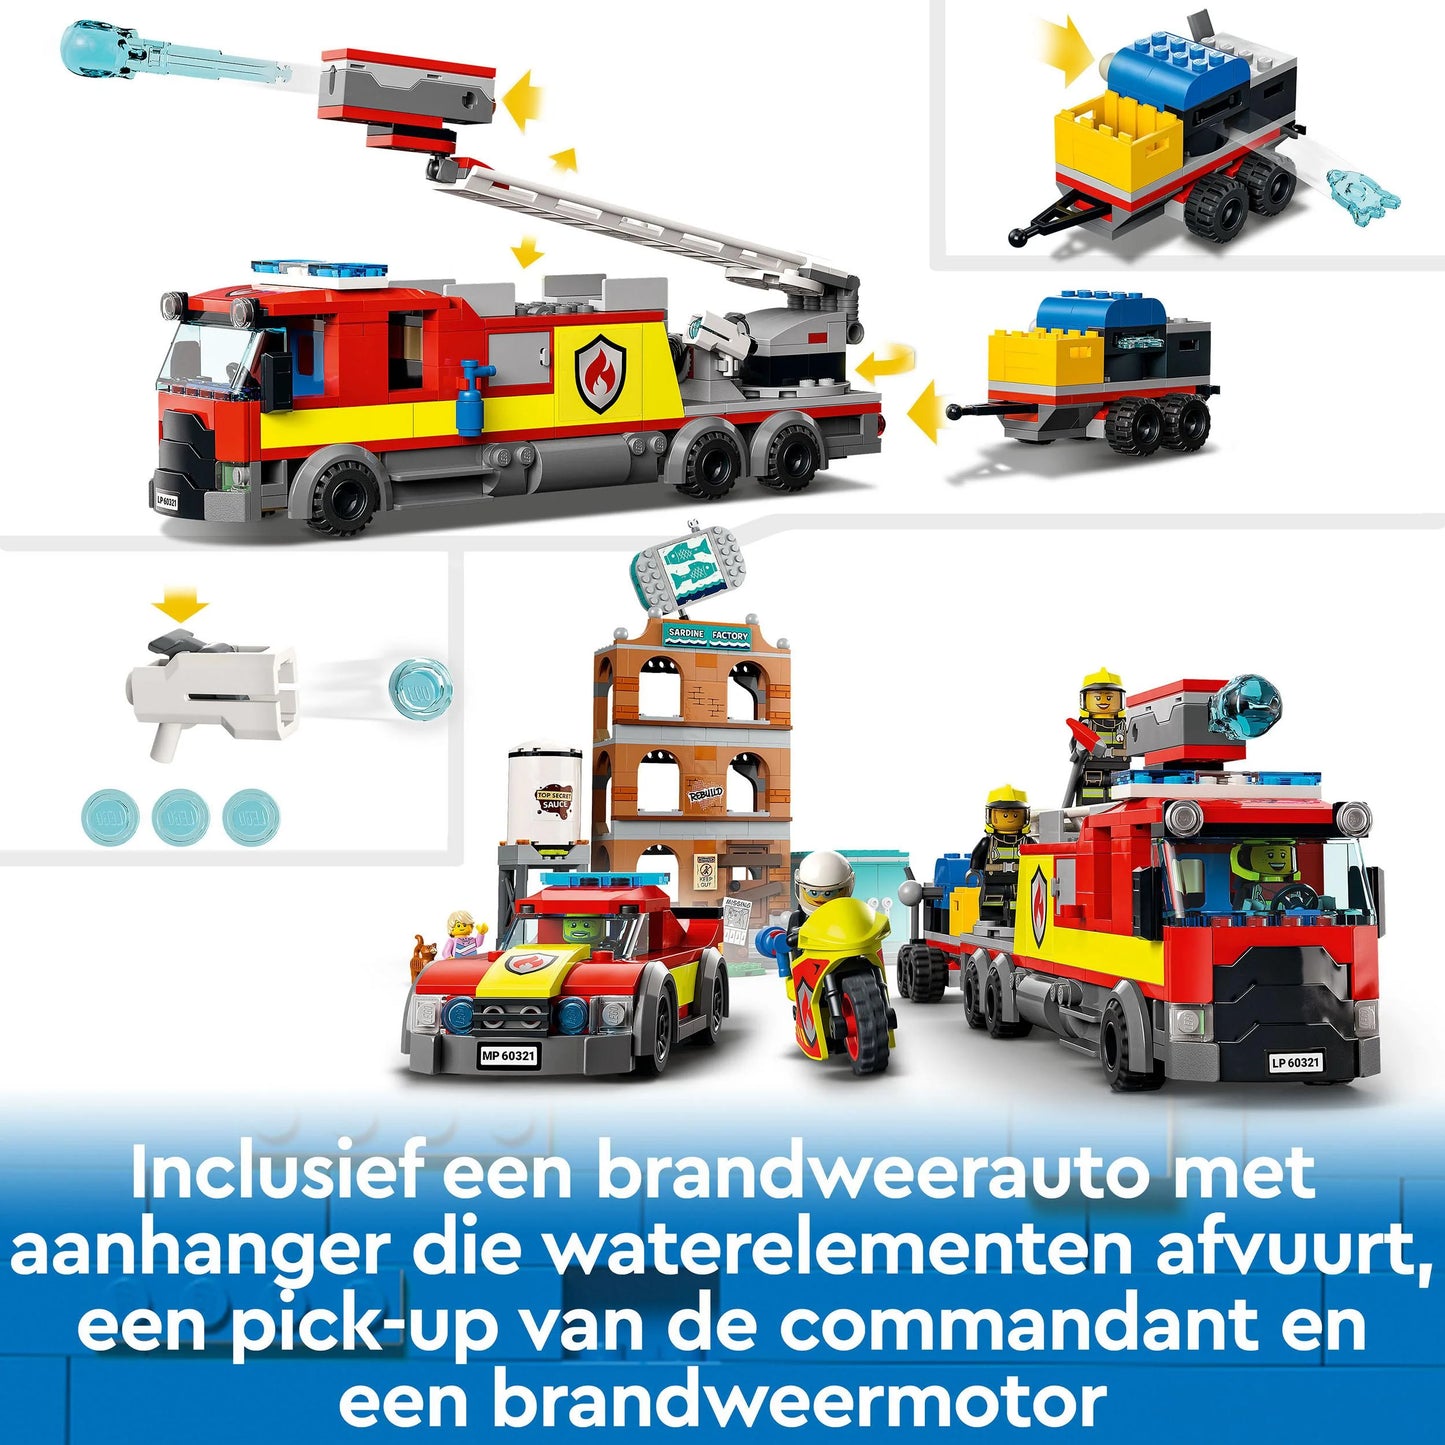 Fire Department - LEGO City